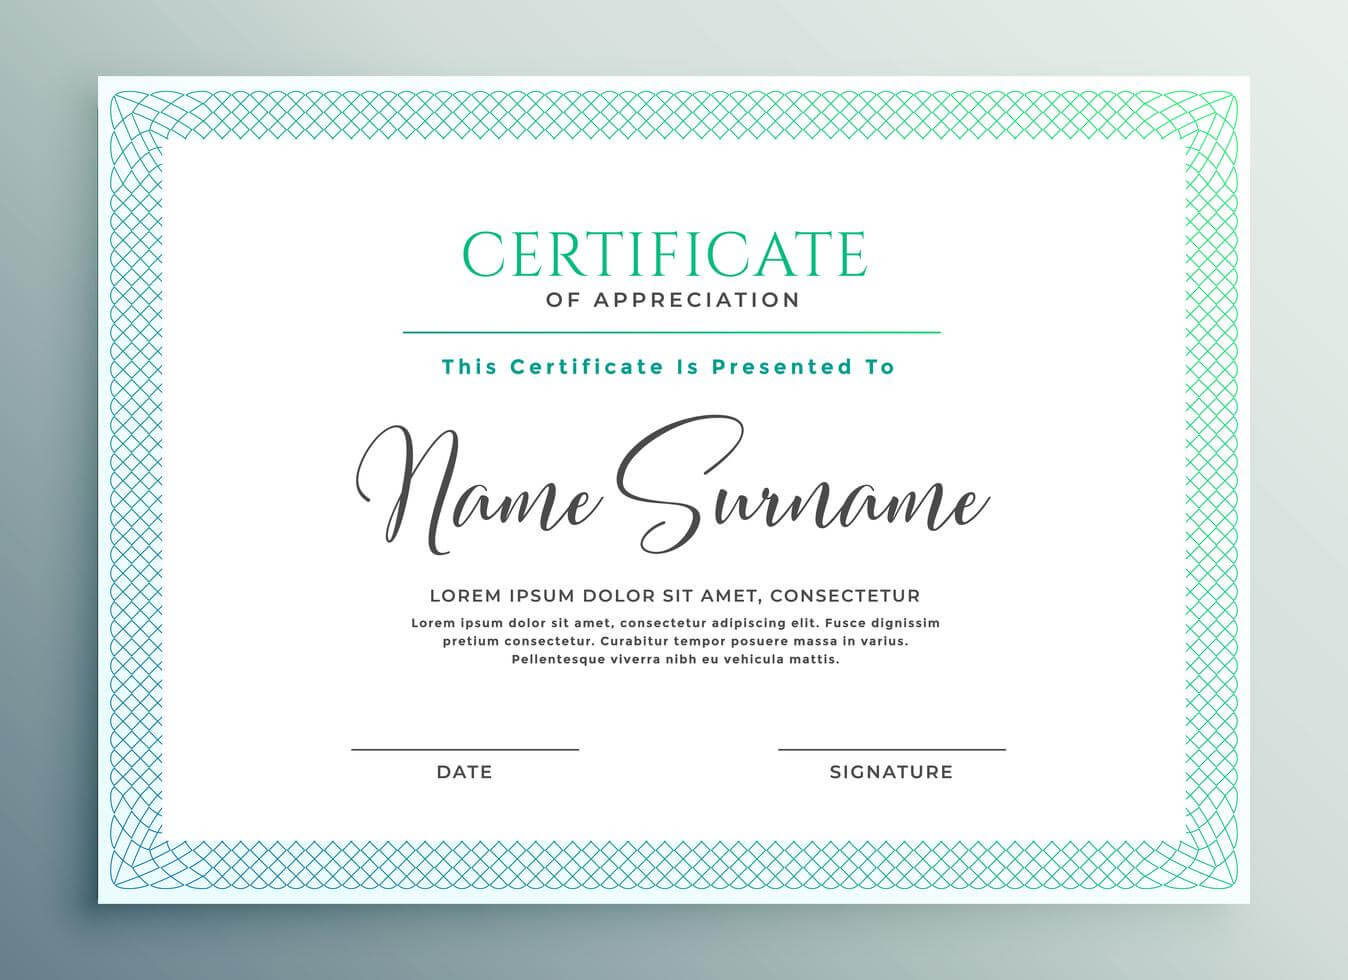 30+ Certificate Of Appreciation Download!! | Templates Study In Certificate Of Excellence Template Word